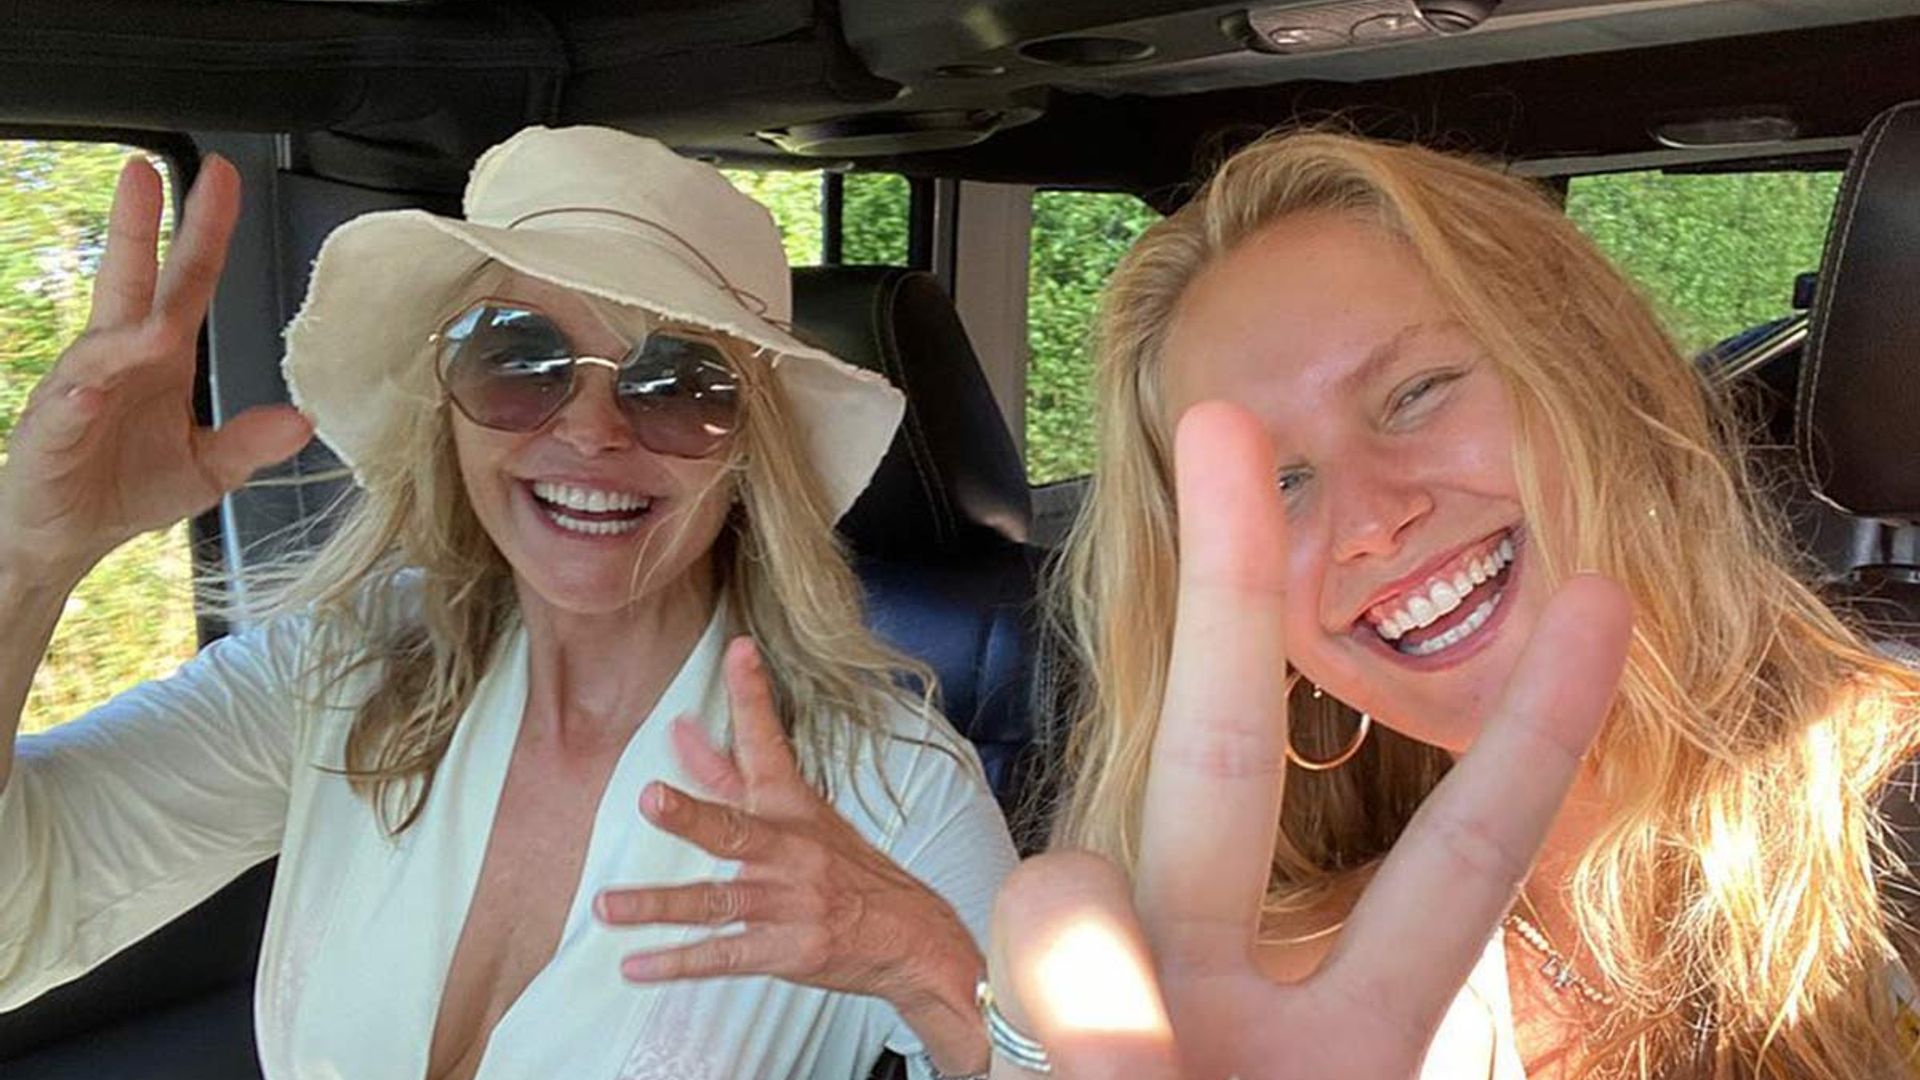 Christie Brinkley’s daughter Sailor looks just like her model mum in stunning bikini photos